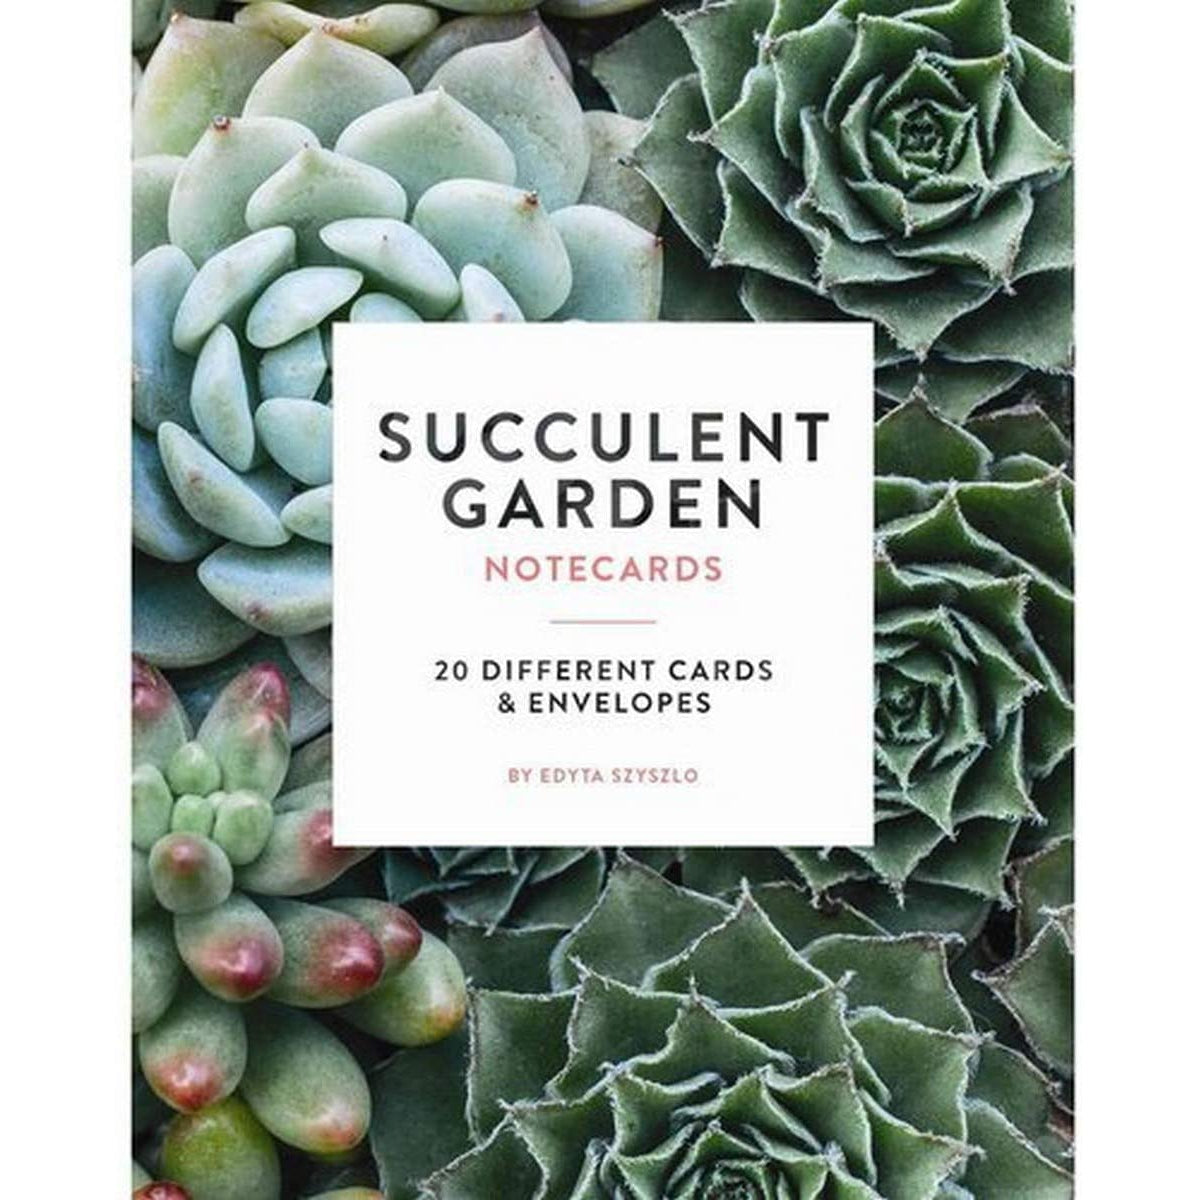 Succulent Garden: Notecards